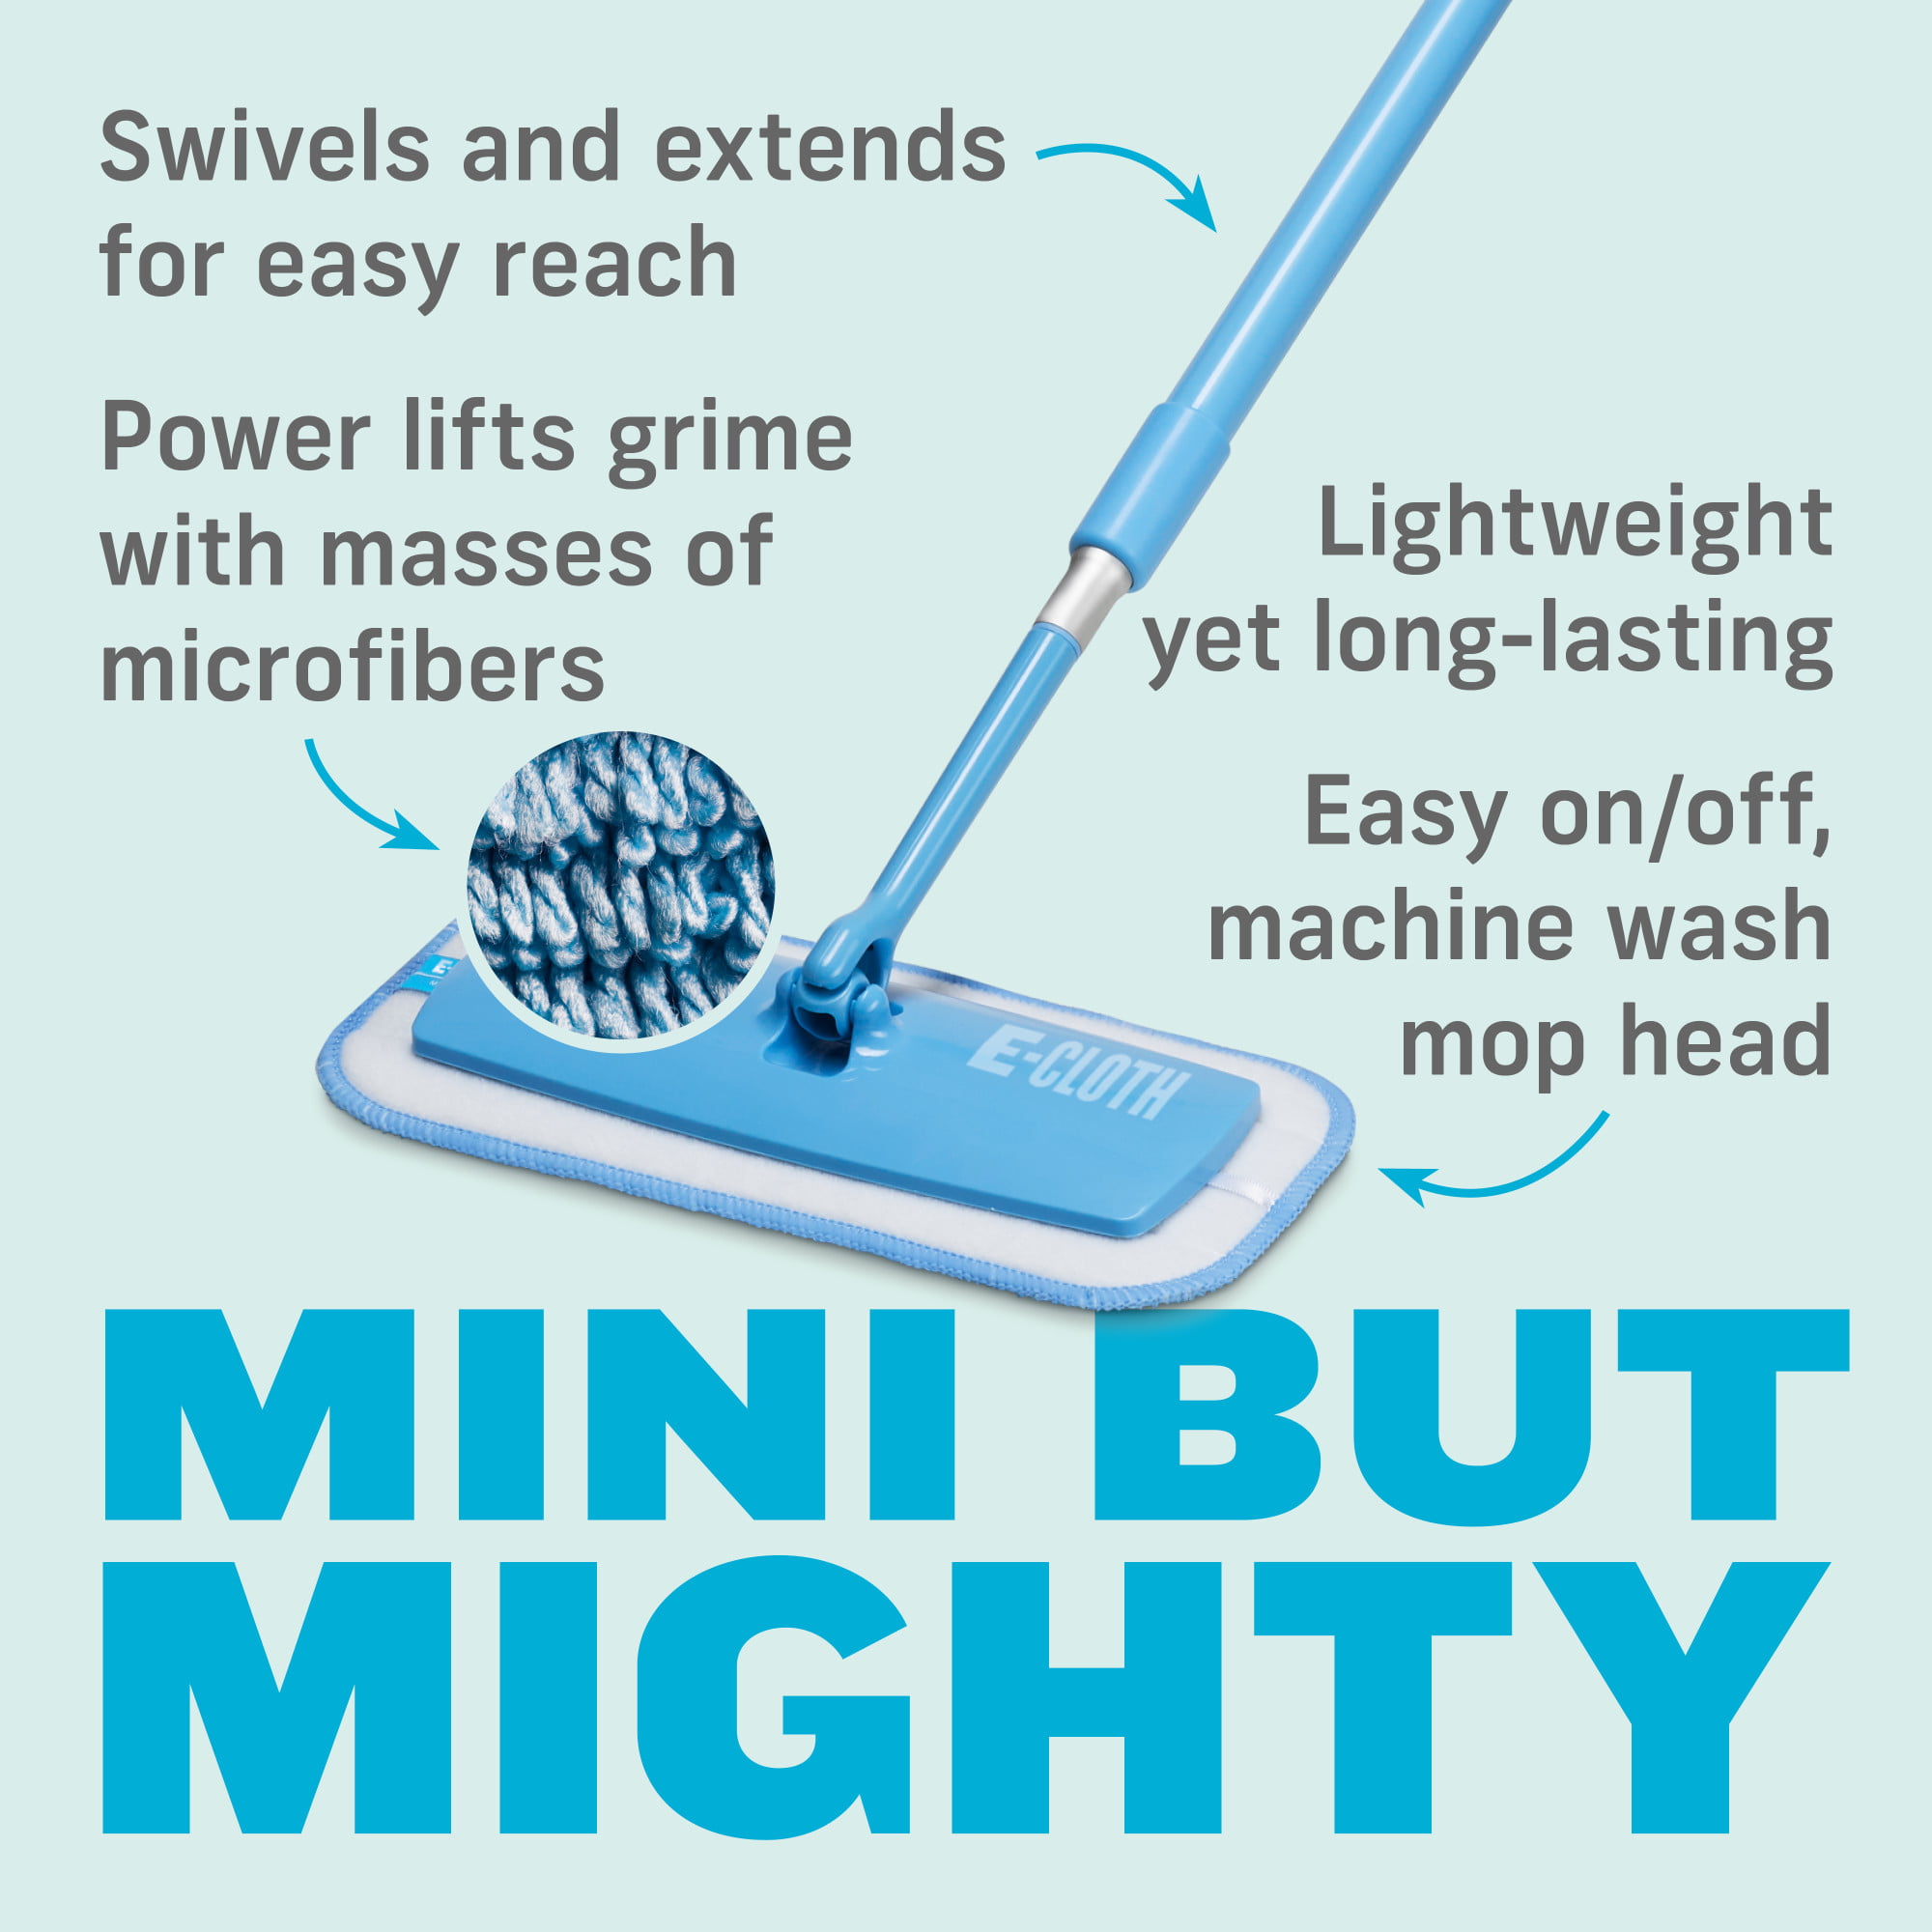 E-Cloth Mini Deep Clean Microfiber Mop